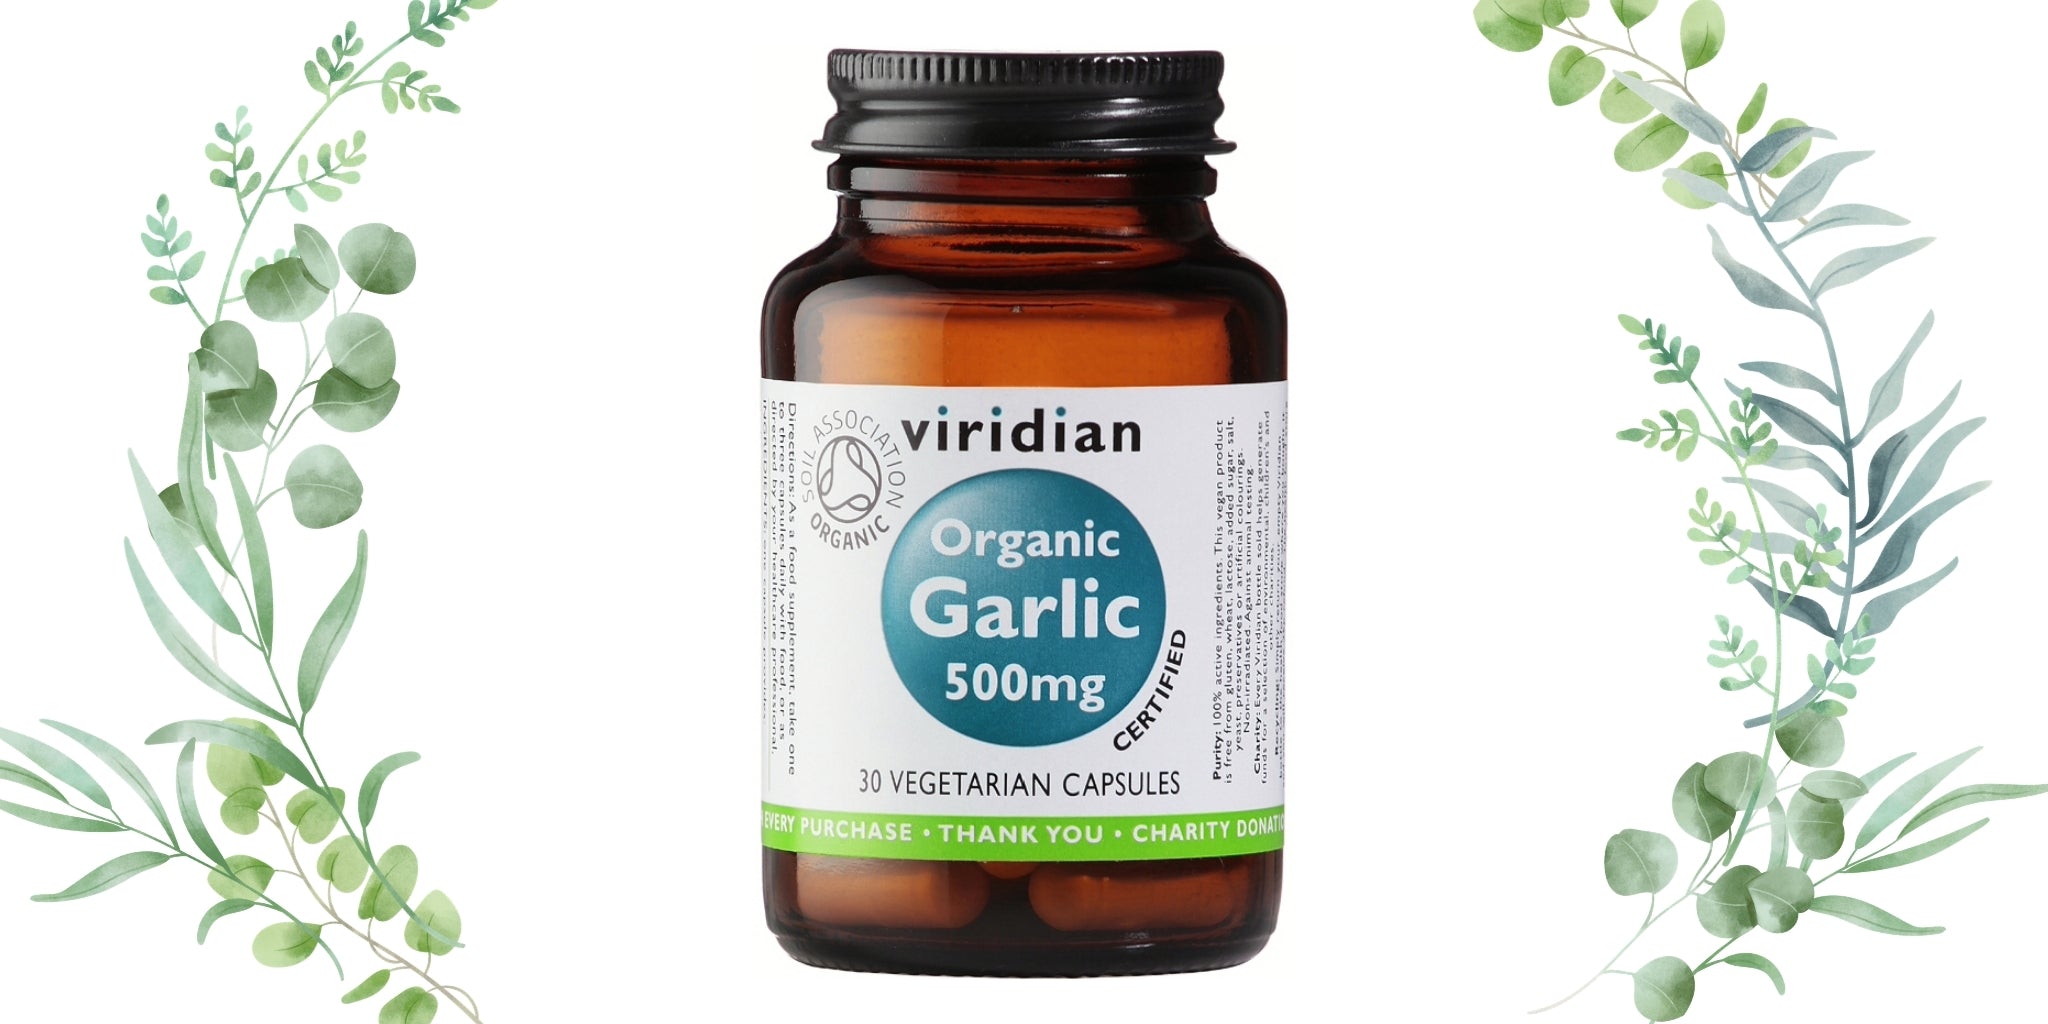 Viridian Organic Garlic 500mg